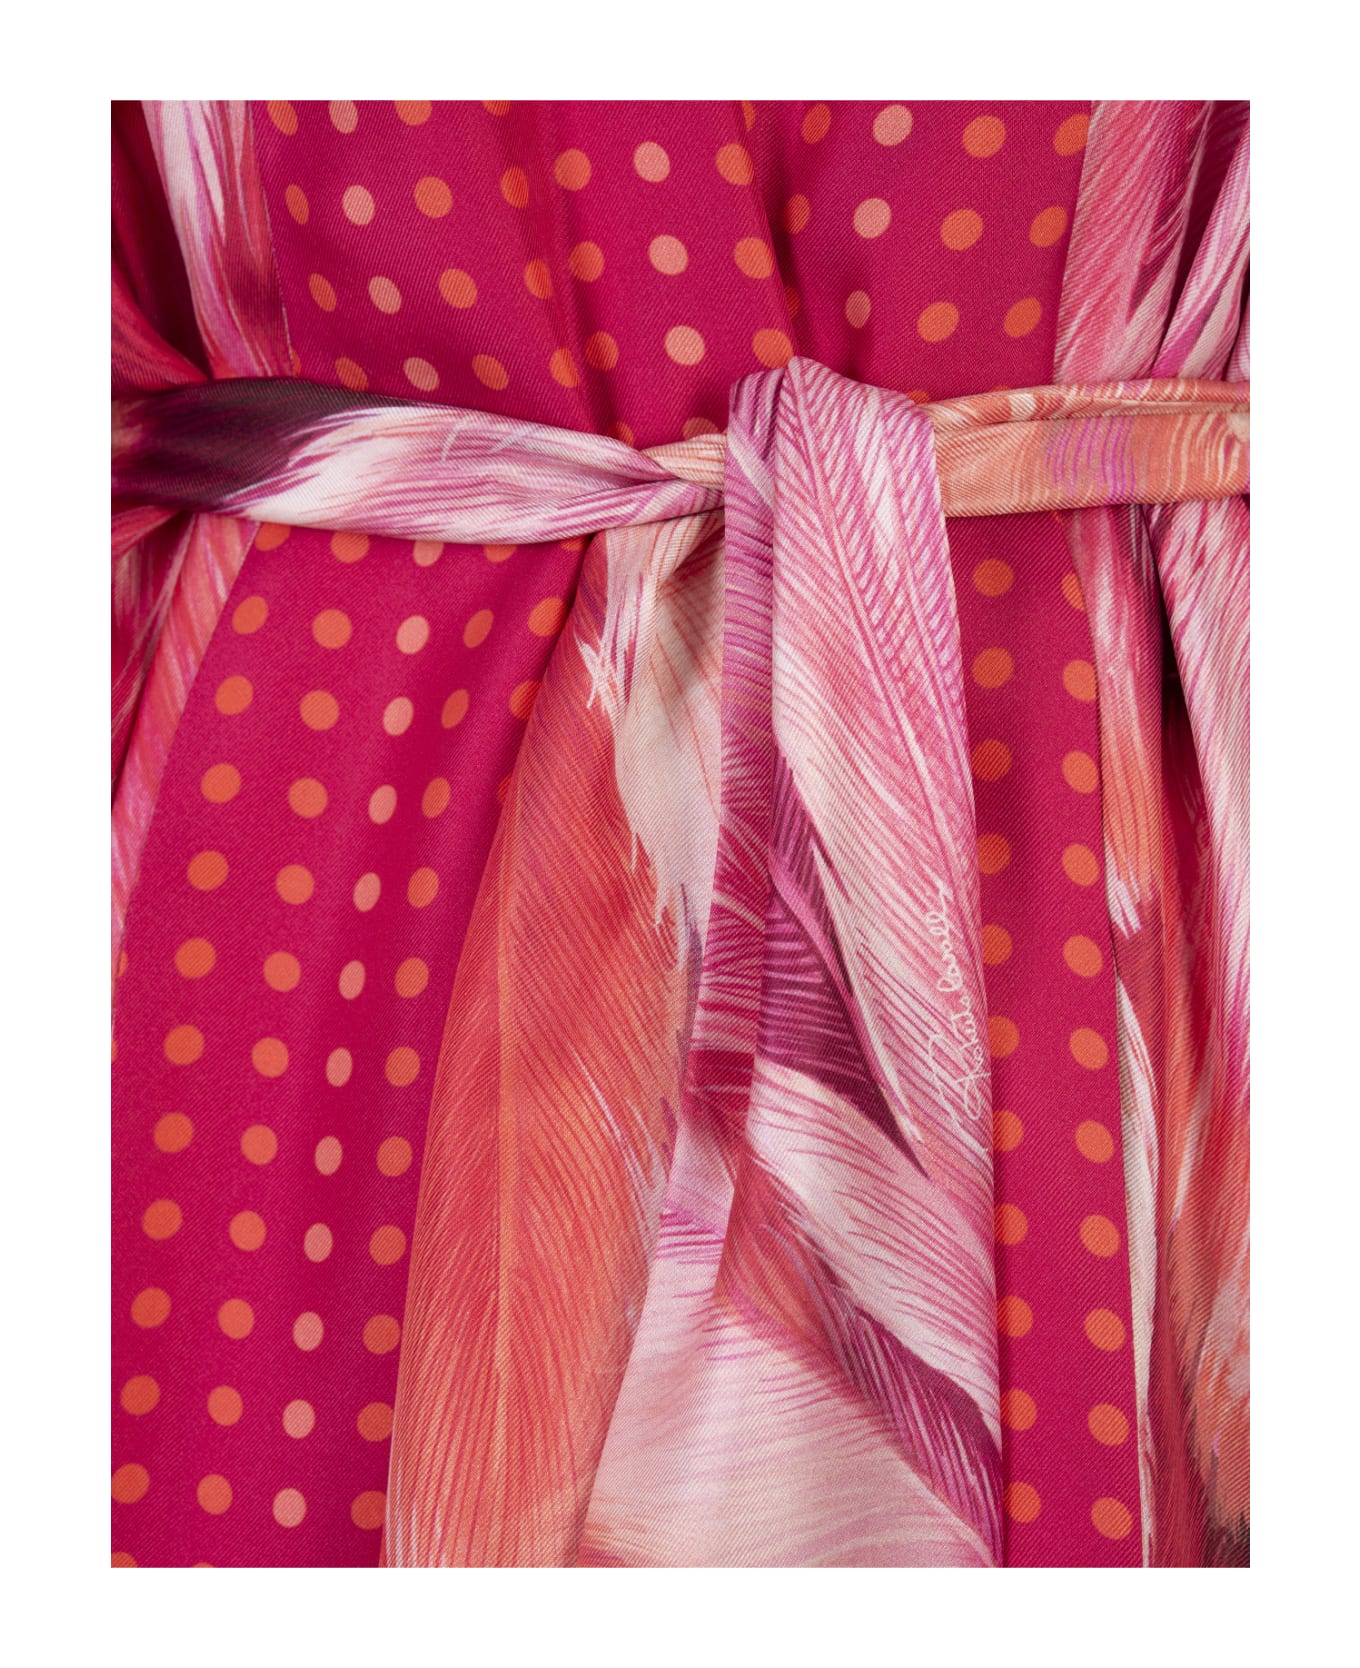 Roberto Cavalli Reversible Long Dress With Pink Plumage Print - Pink ジャンプスーツ